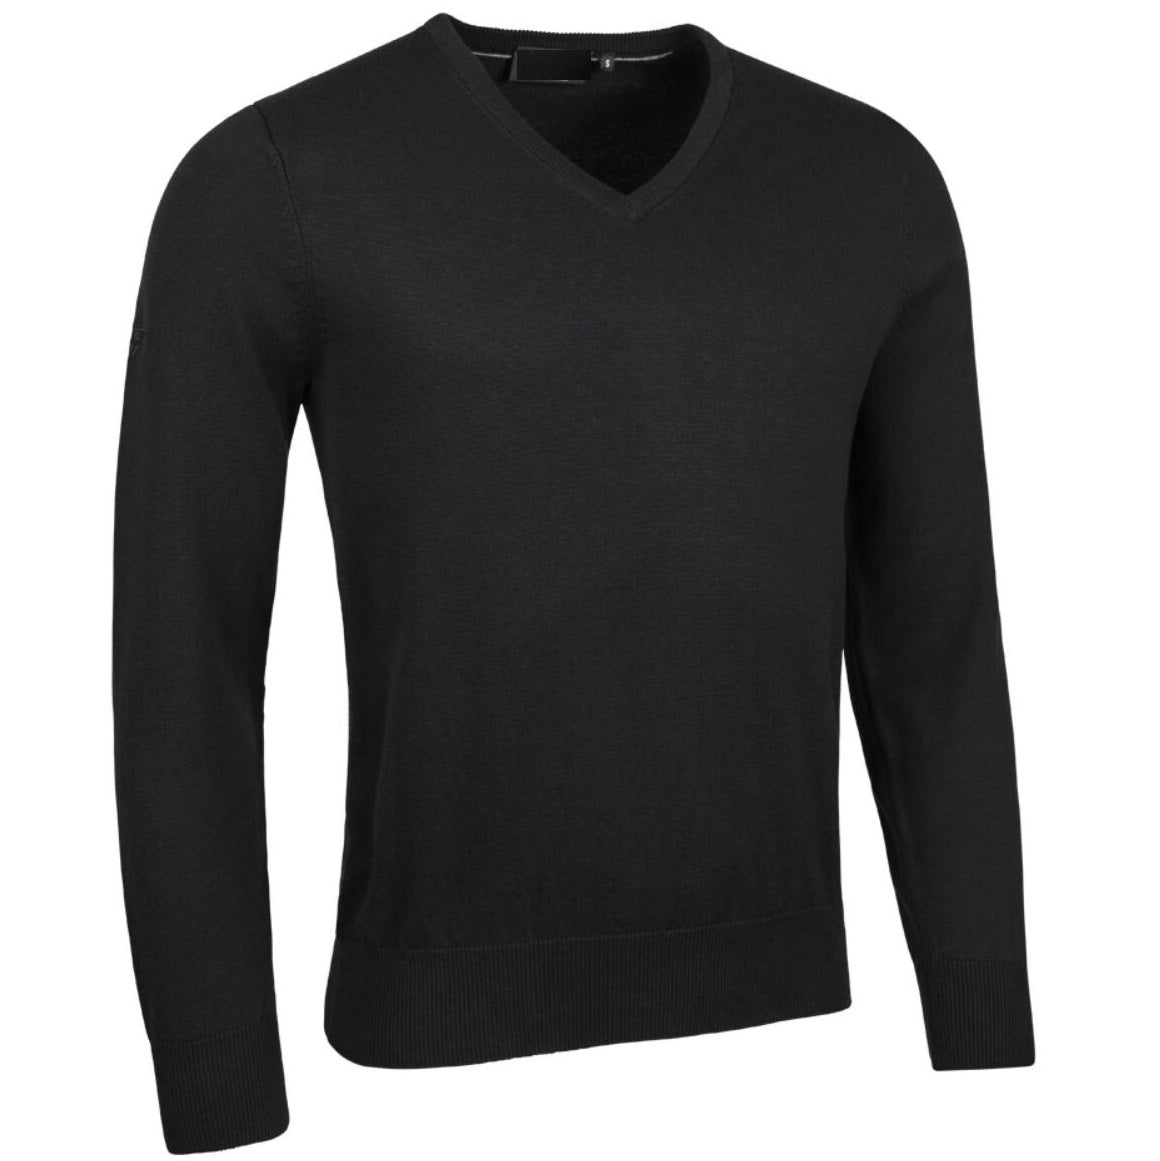 50% OFF - ORLO VIVO Cotton Cashmere V-Neck Sweater - Tailored Fit - Size: 2XL & 3XL